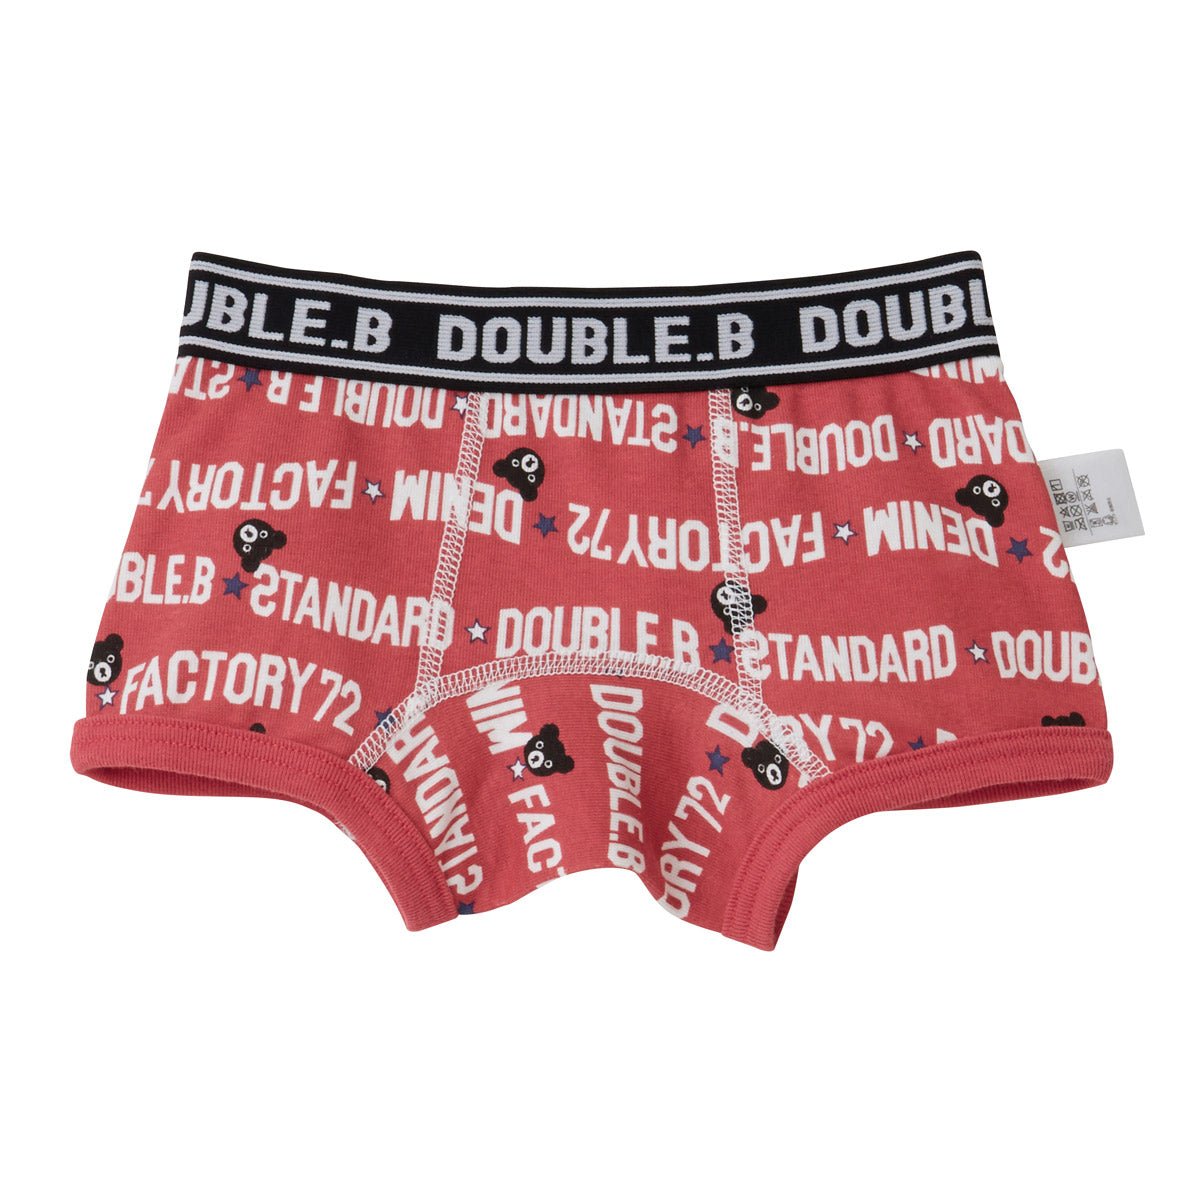 DOUBLE_B Everyday Boxer Set - 60-2485-823-02-90